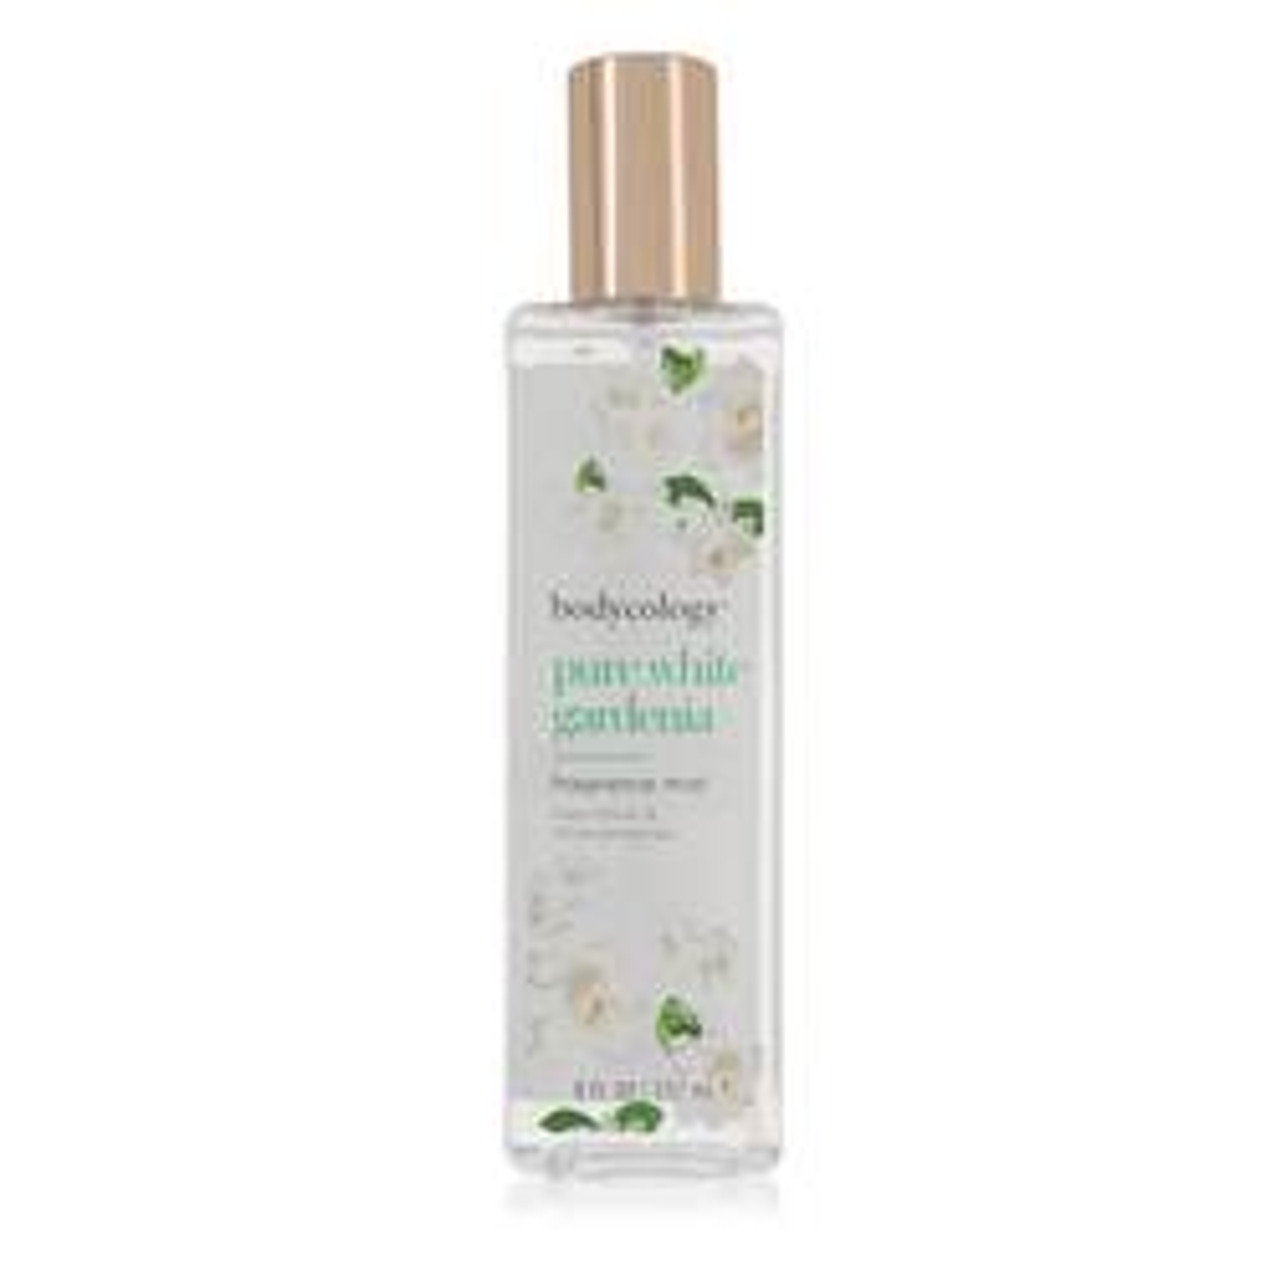 Bodycology Pure White Gardenia Perfume By Bodycology Fragrance Mist Spray 8 oz for Women - *Pre-Order